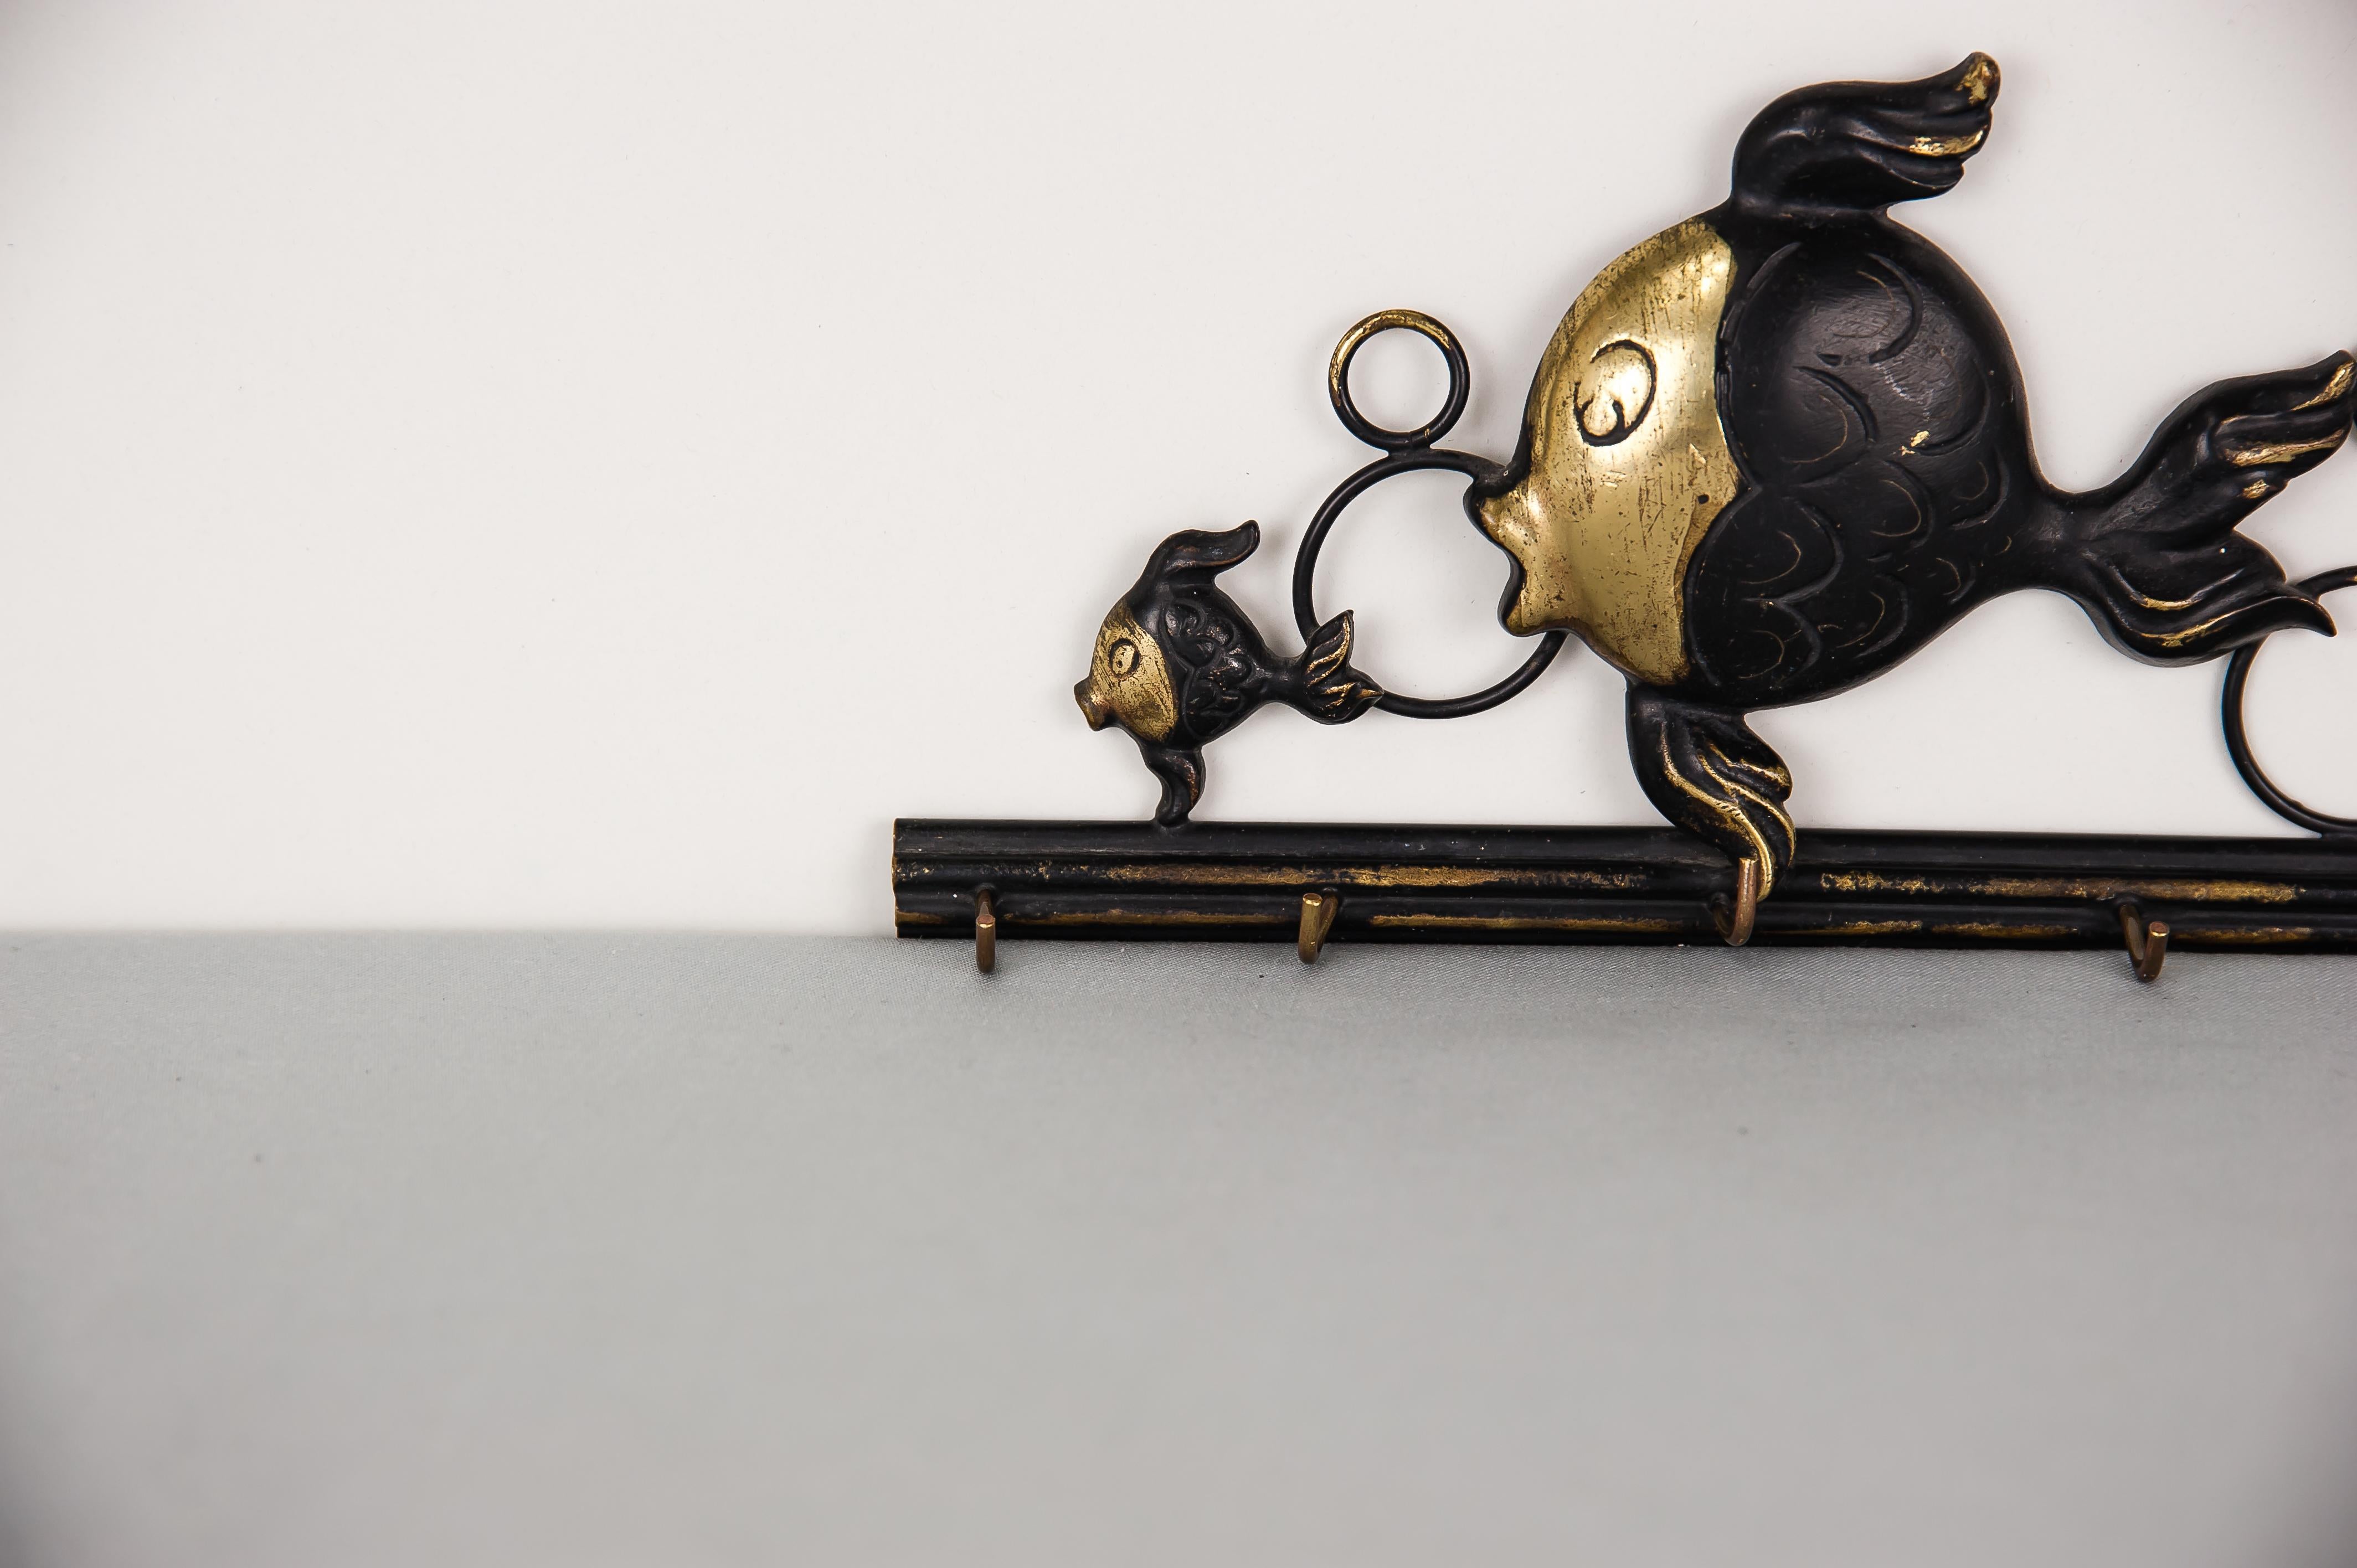 Walter Bosse fish key hanger
Original condition.